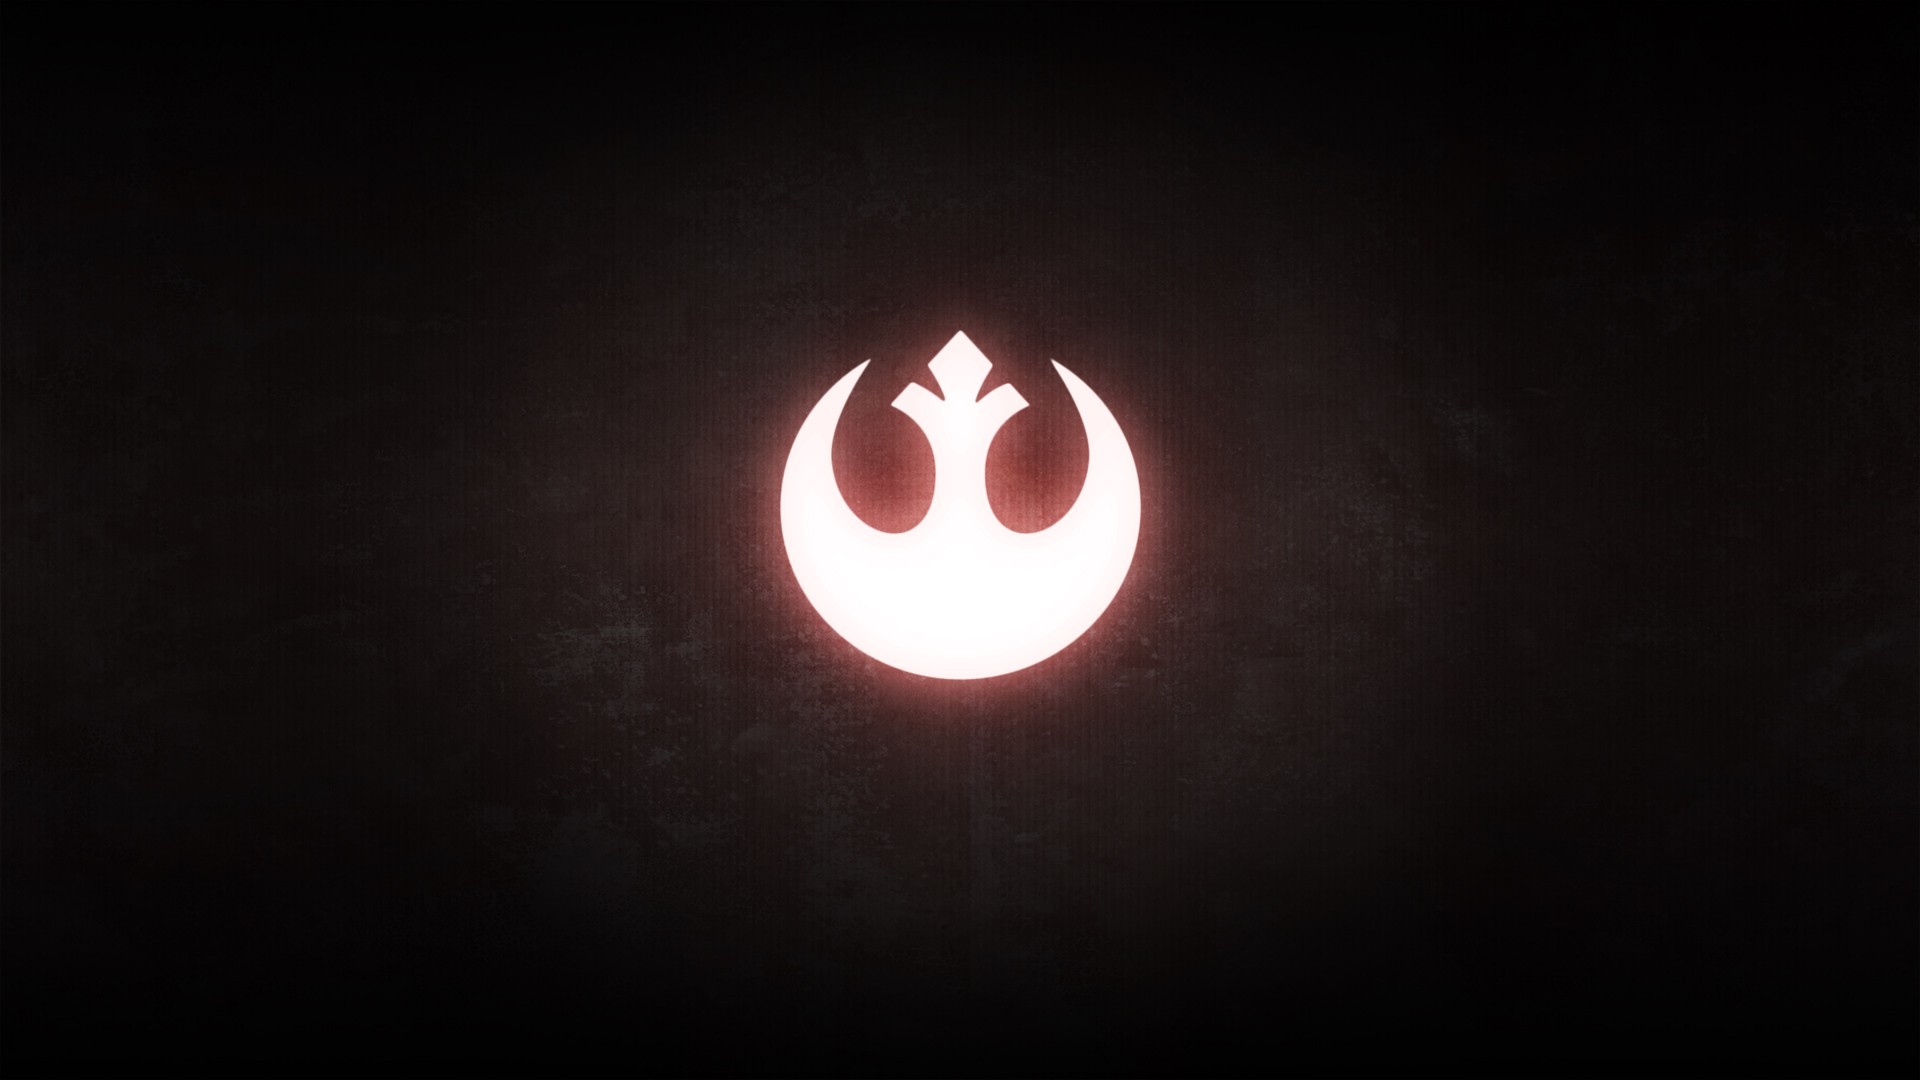 Rebel Alliance Wallpaper Image